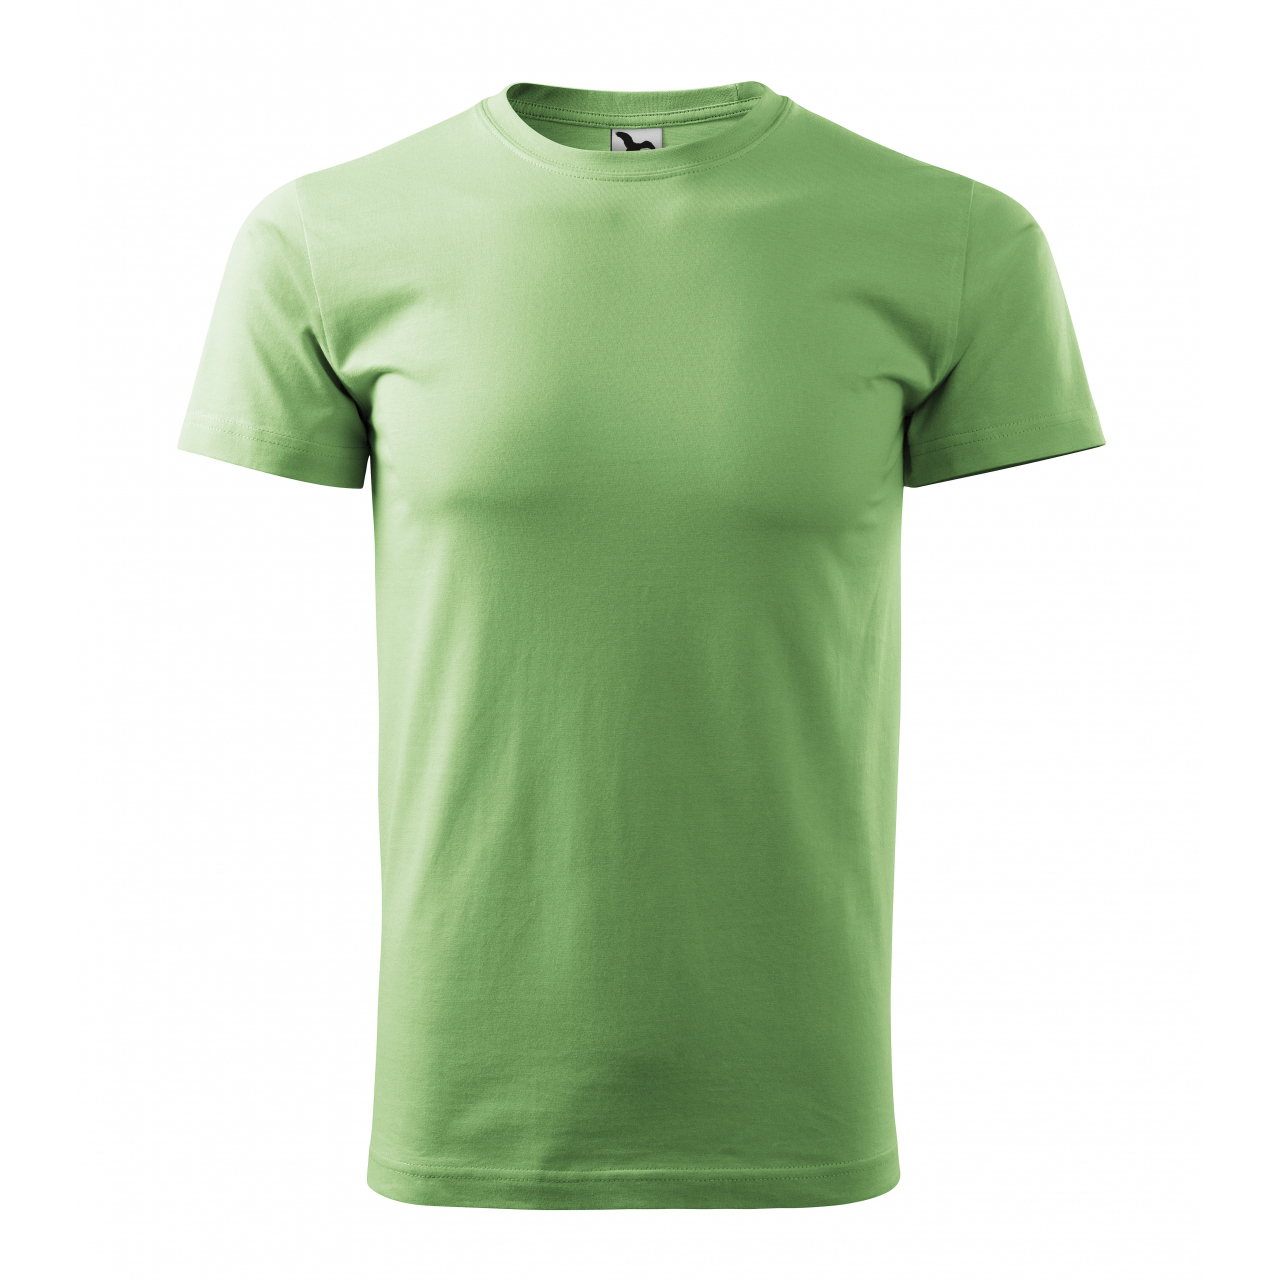 Tričko unisex Malfini Heavy New - světle zelené, XS